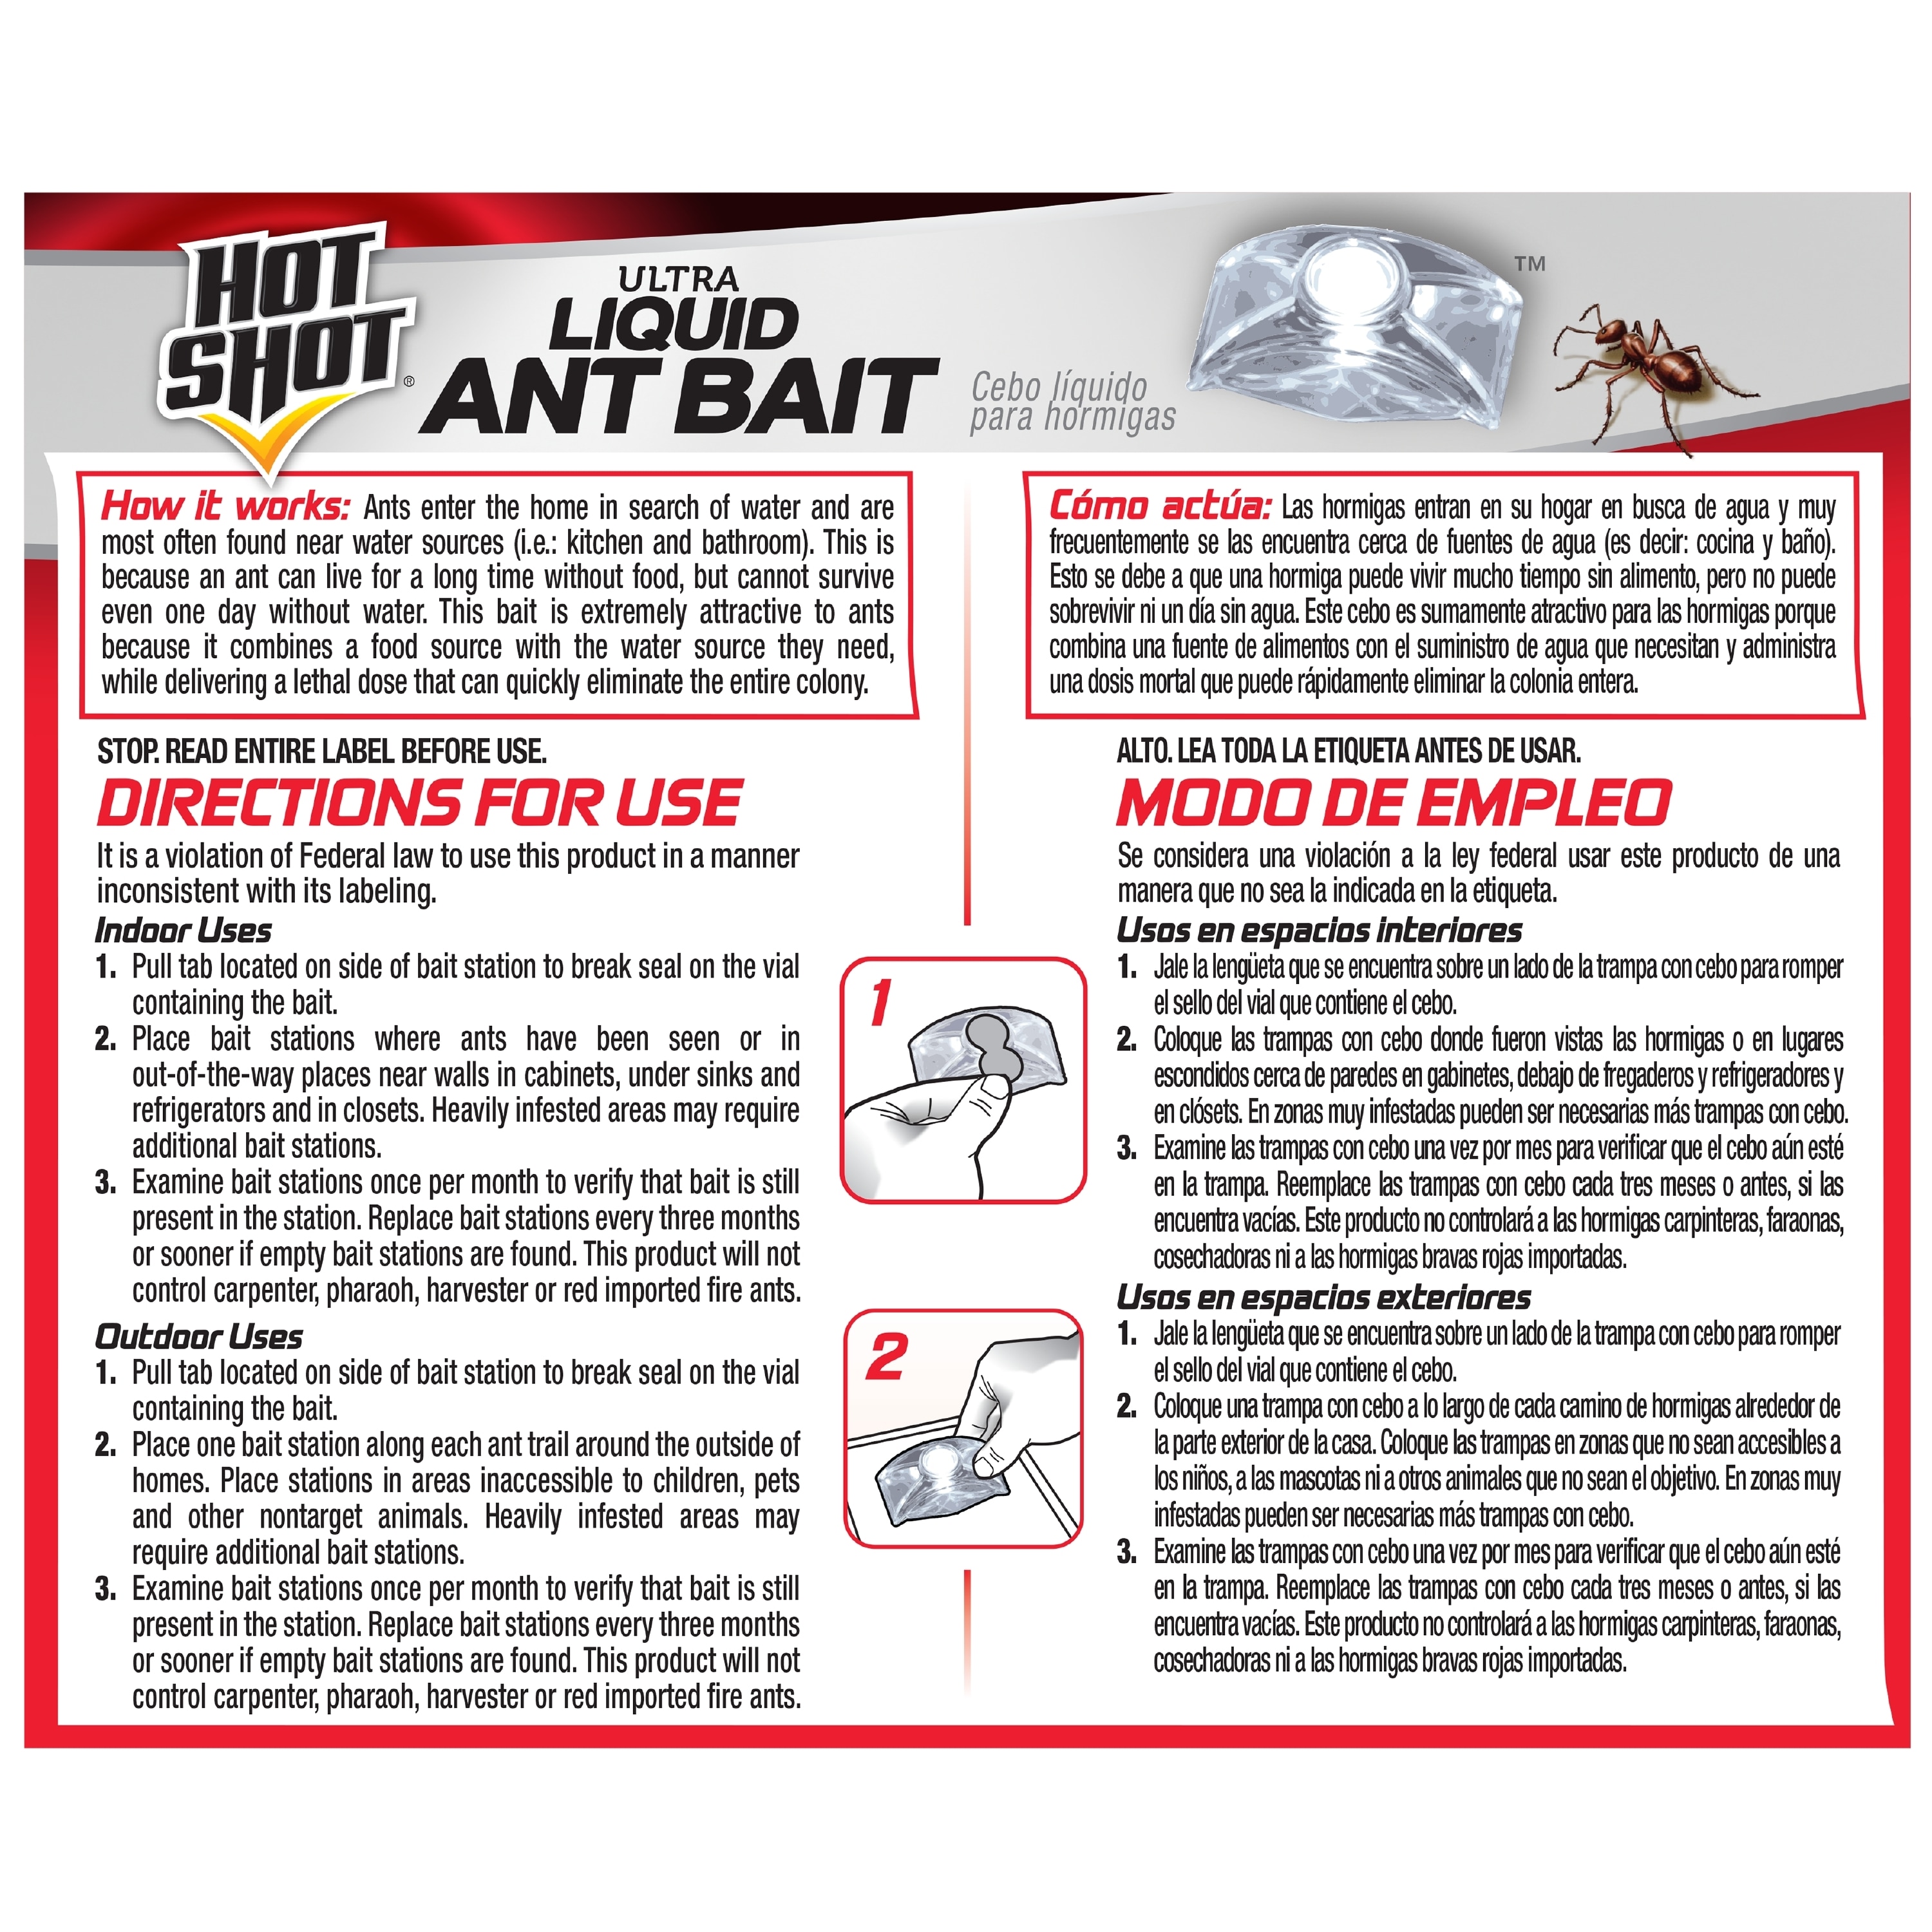 Hot Shot 0.45-fl oz Ultra Liquid Ant Bait Station (4-Pack) at